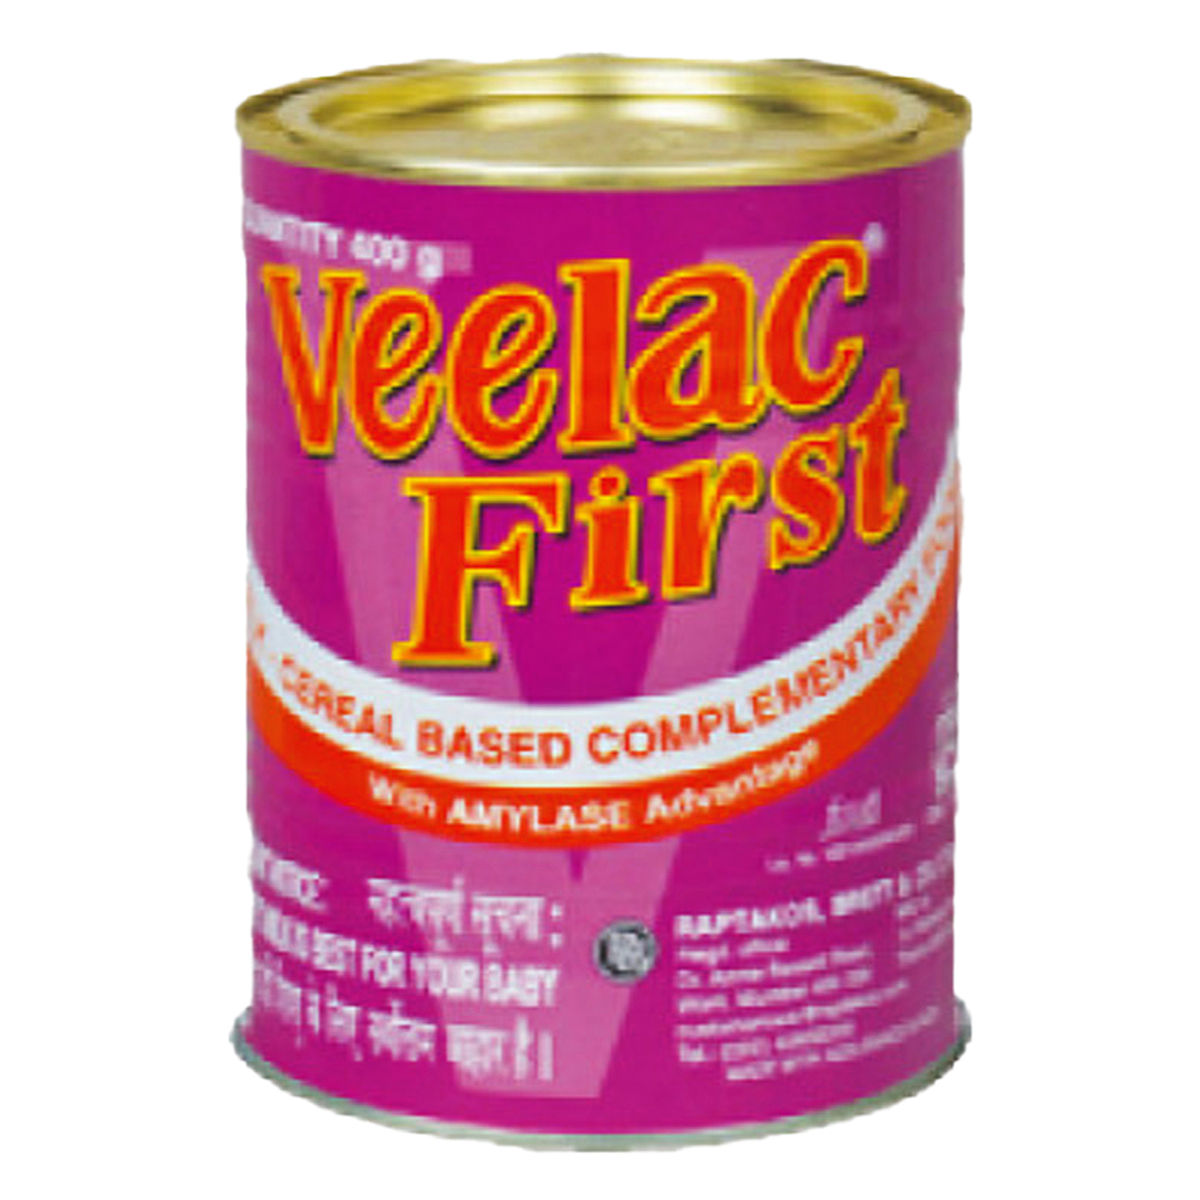 Buy Veelac First Powder, 400 gm Online